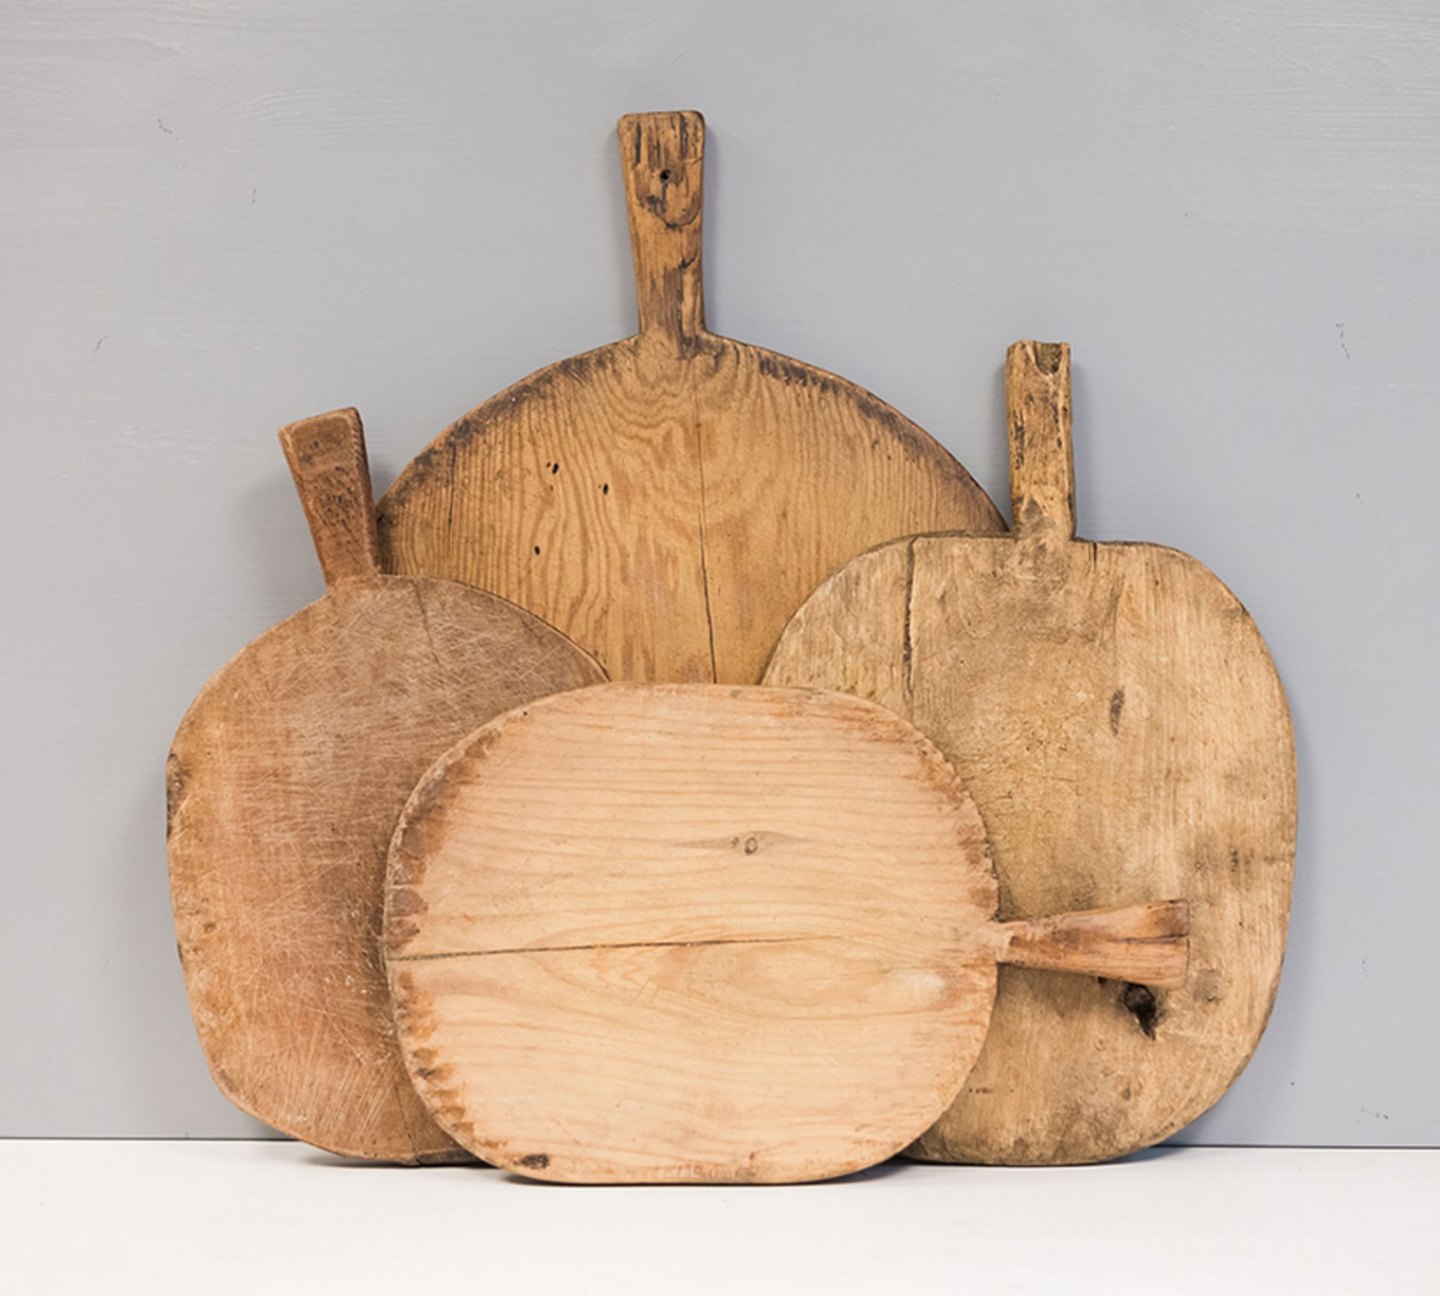 Antique Decorative Rustic Wood Board, Pottery Barn. #rusticwoodboards #europeancountrykitchen